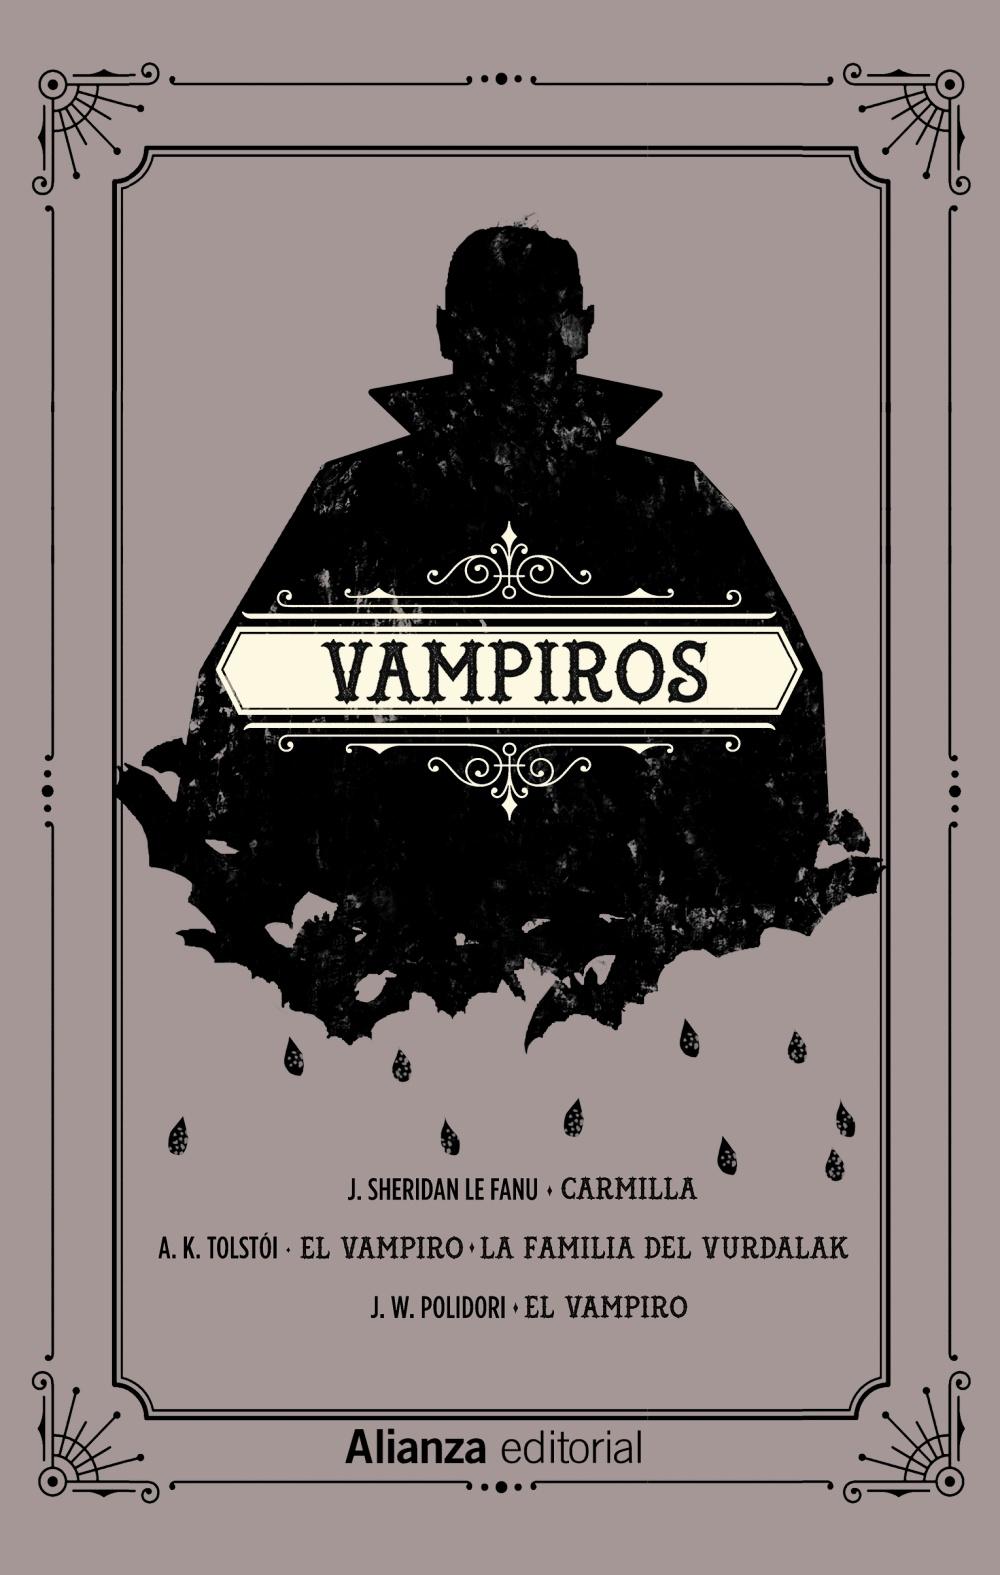 Vampiros "Carmilla. El vampiro. La familia del vurdalak. El vampiro". 